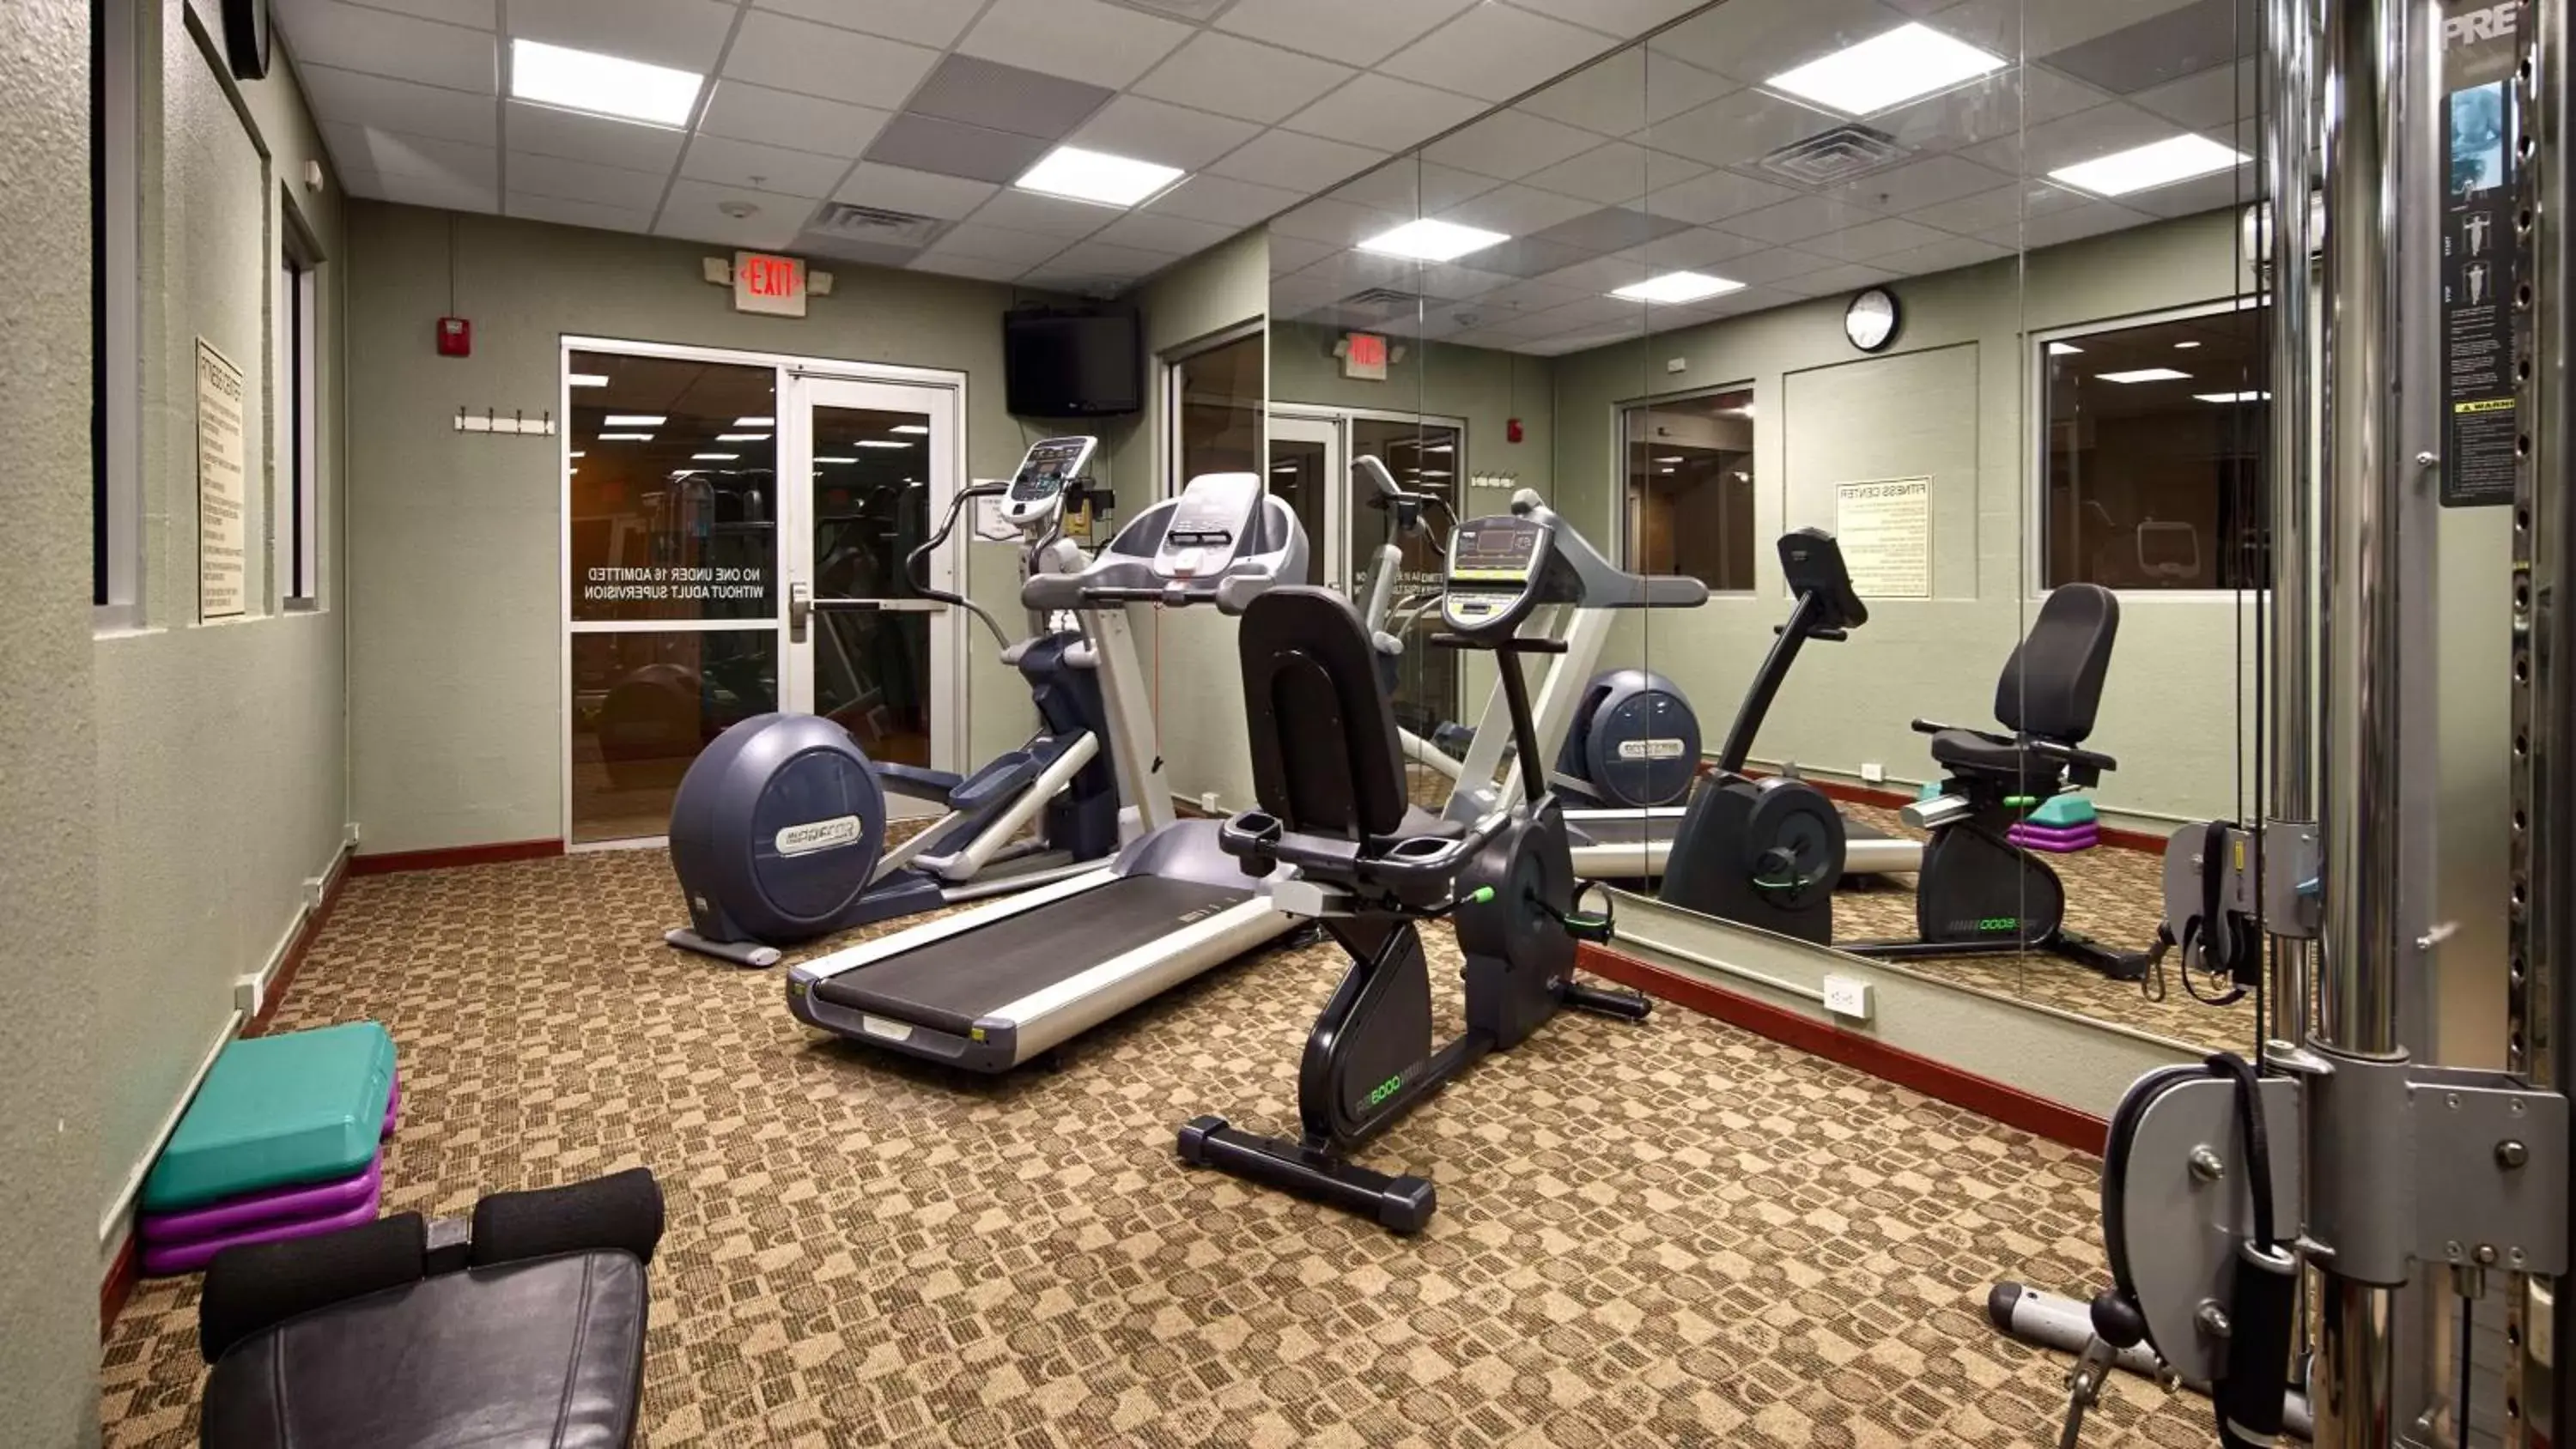 Fitness centre/facilities in Best Western Plus Sandusky Hotel & Suites